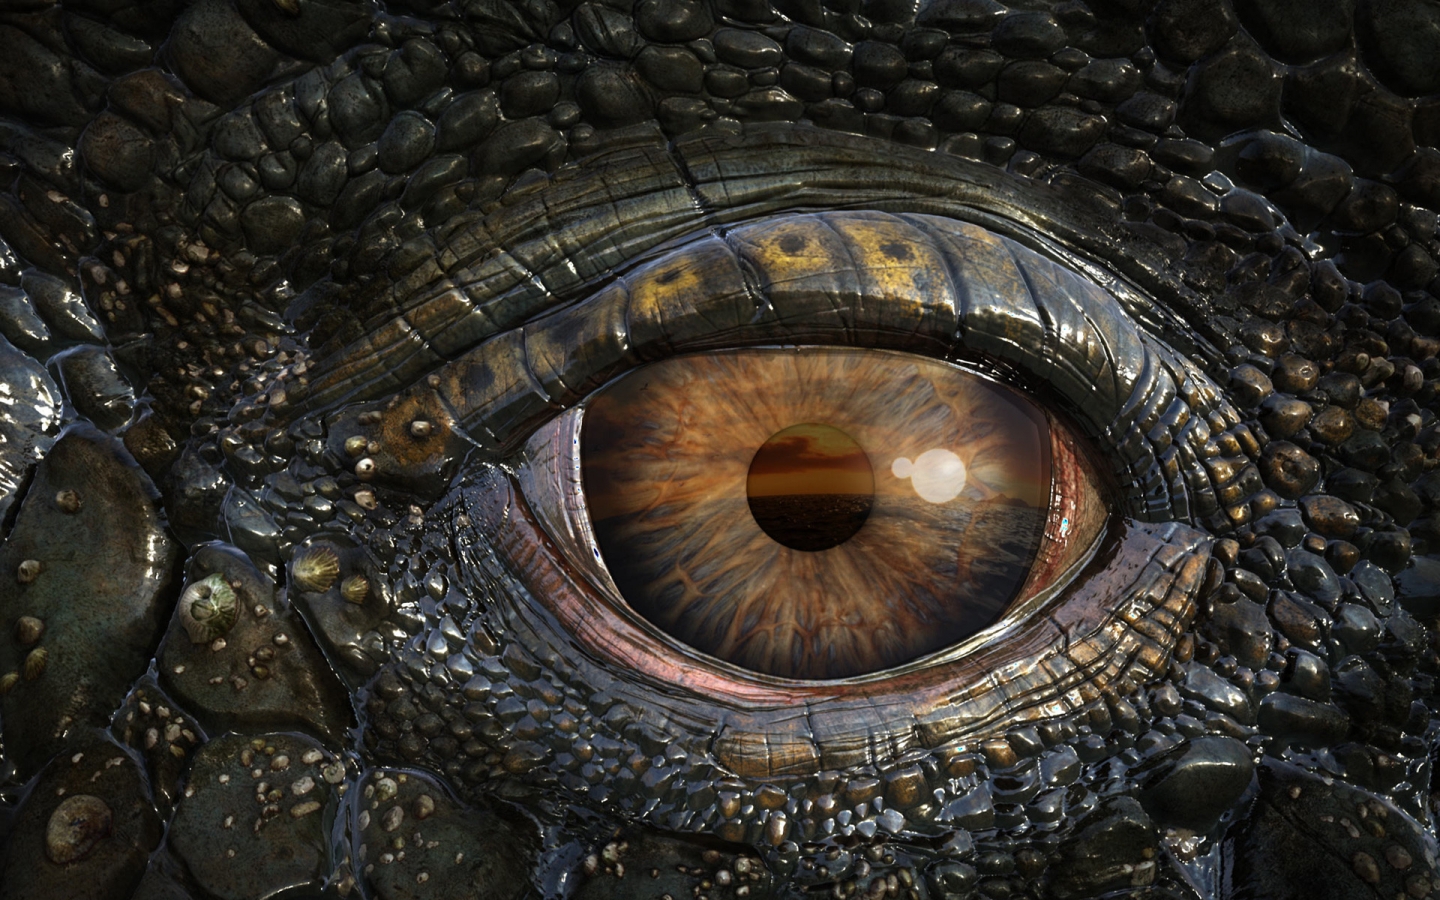 Mosasaur Eye for 1440 x 900 widescreen resolution